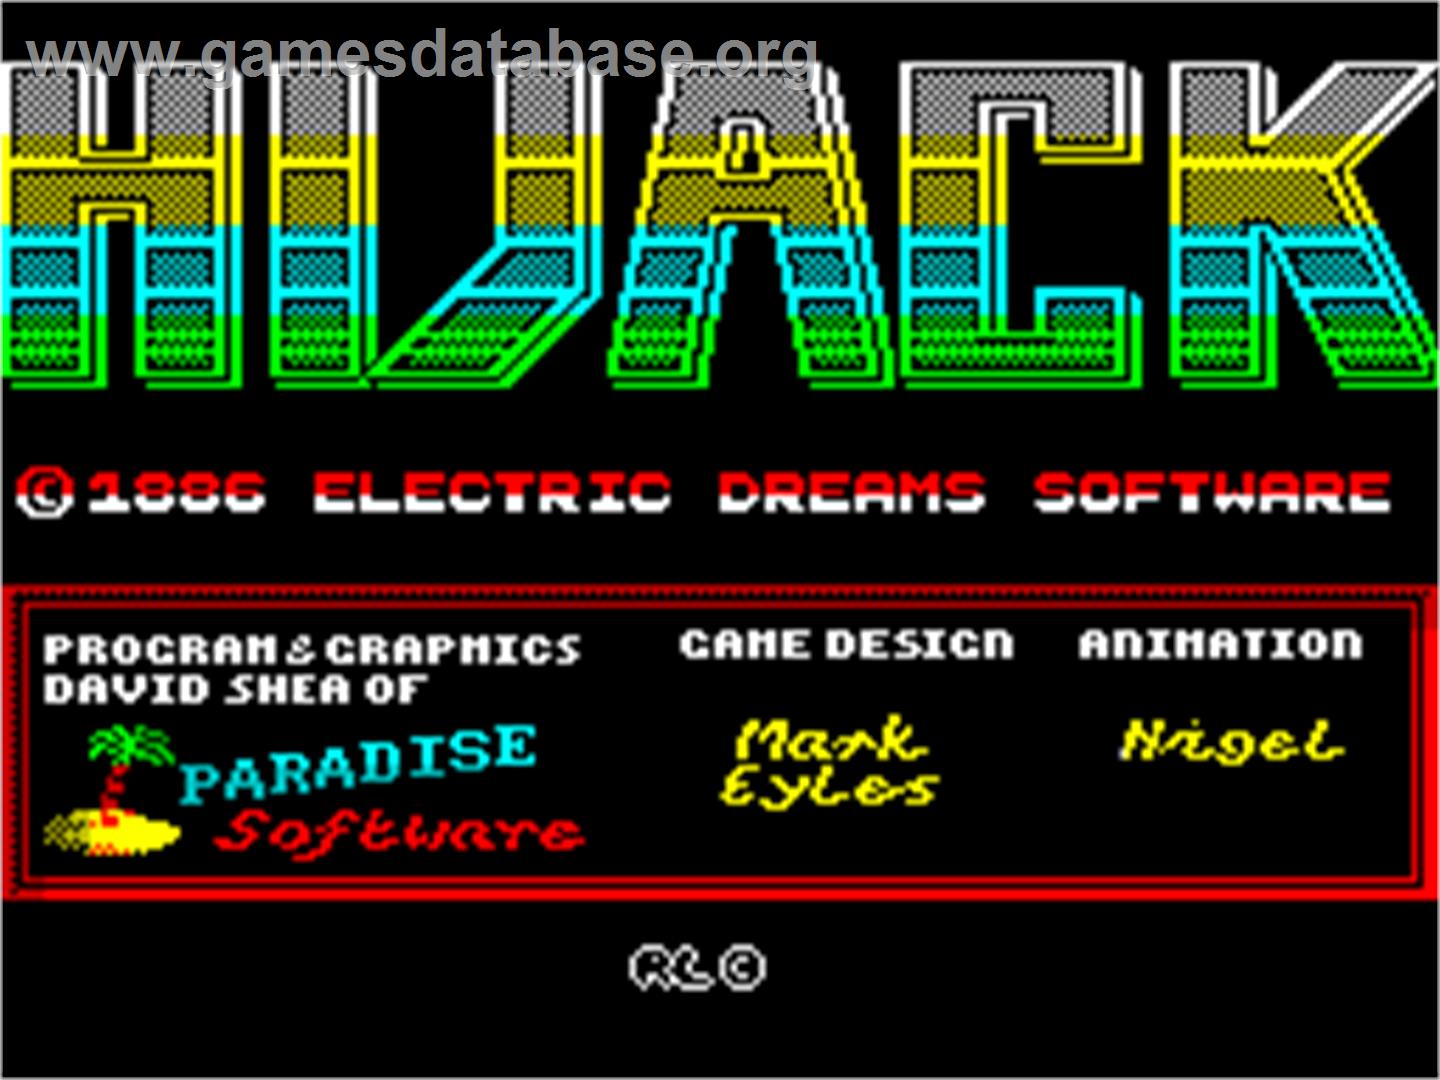 Hijack - Sinclair ZX Spectrum - Artwork - Title Screen